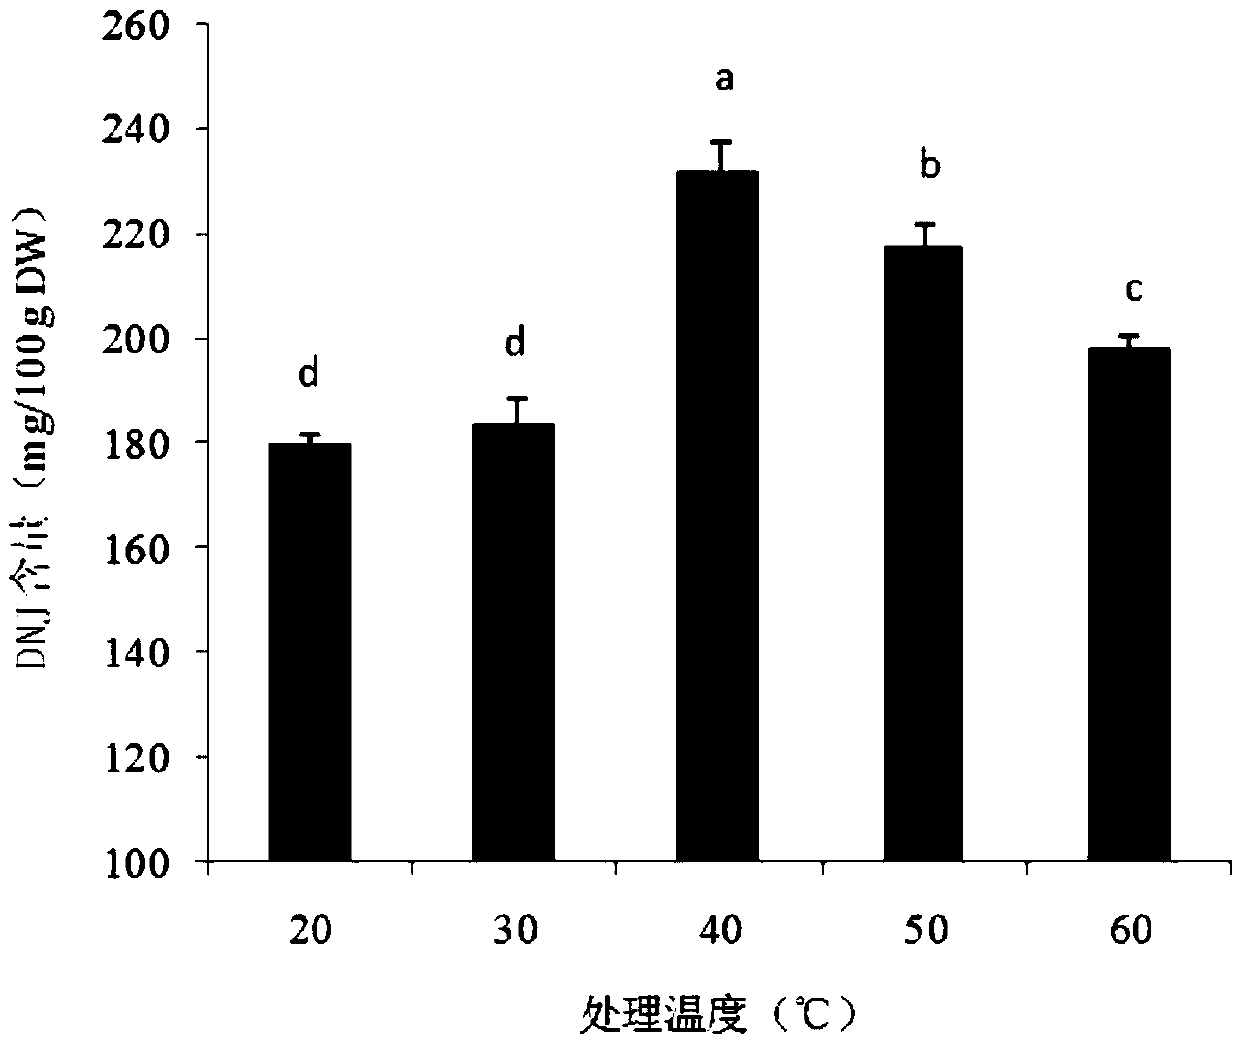 1-deoxynojirimycin enriched mulberry leaf preparation method and obtained ultra-fine powder